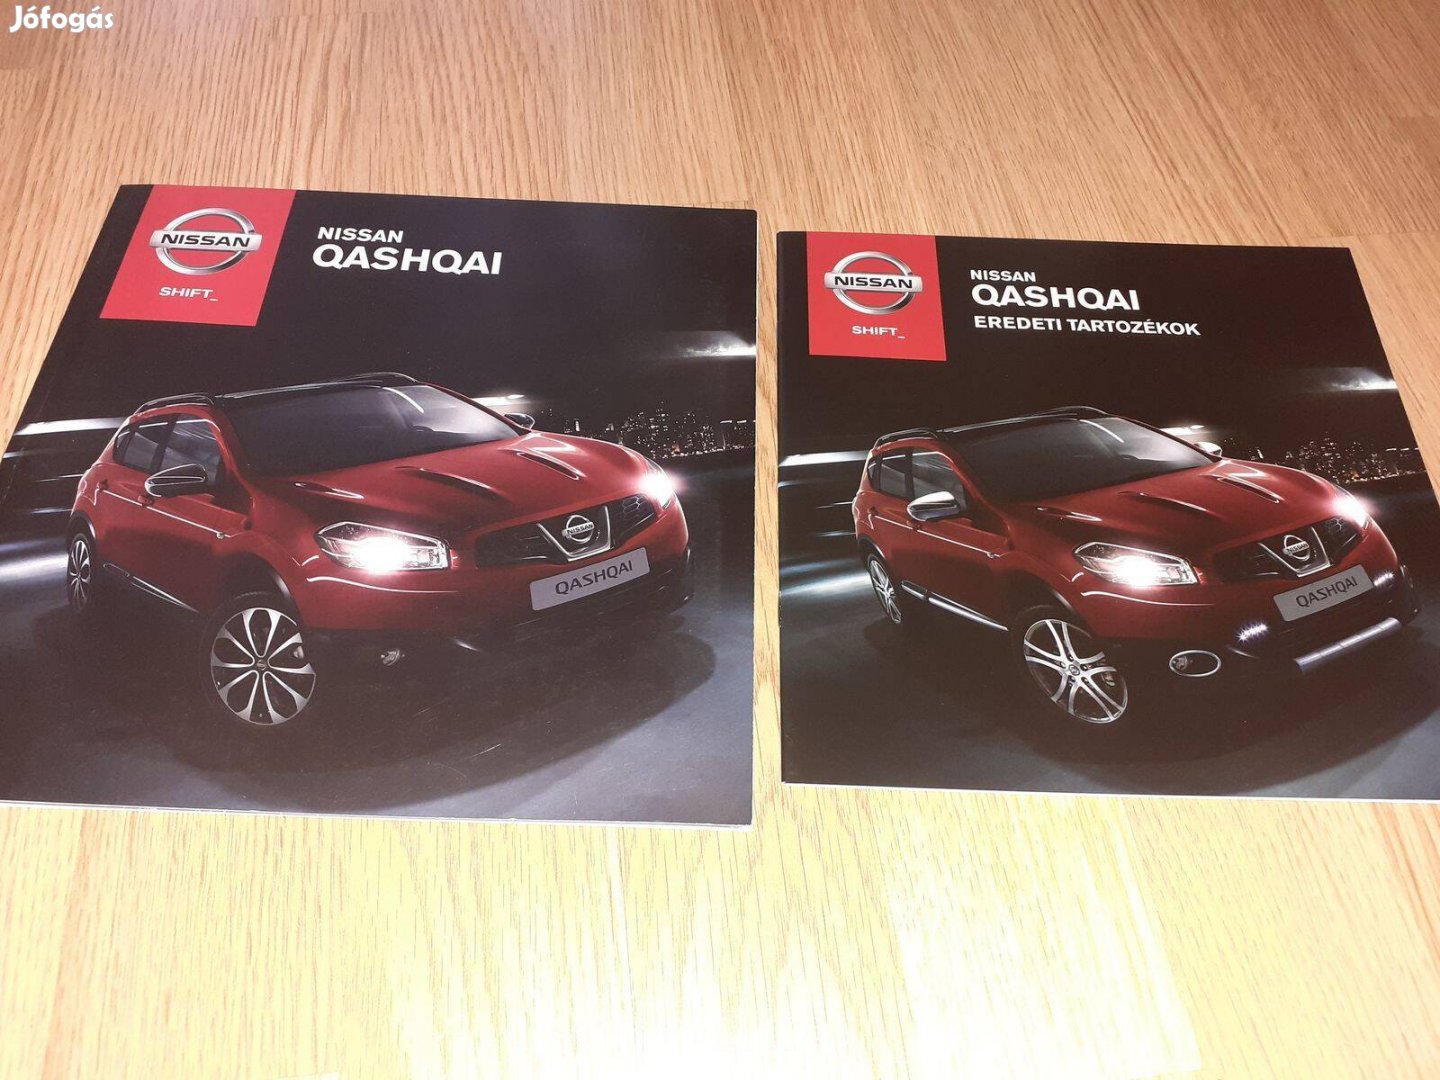 Nissan Qashqai prospektus + tartozék - 2013, magyar nyelvű